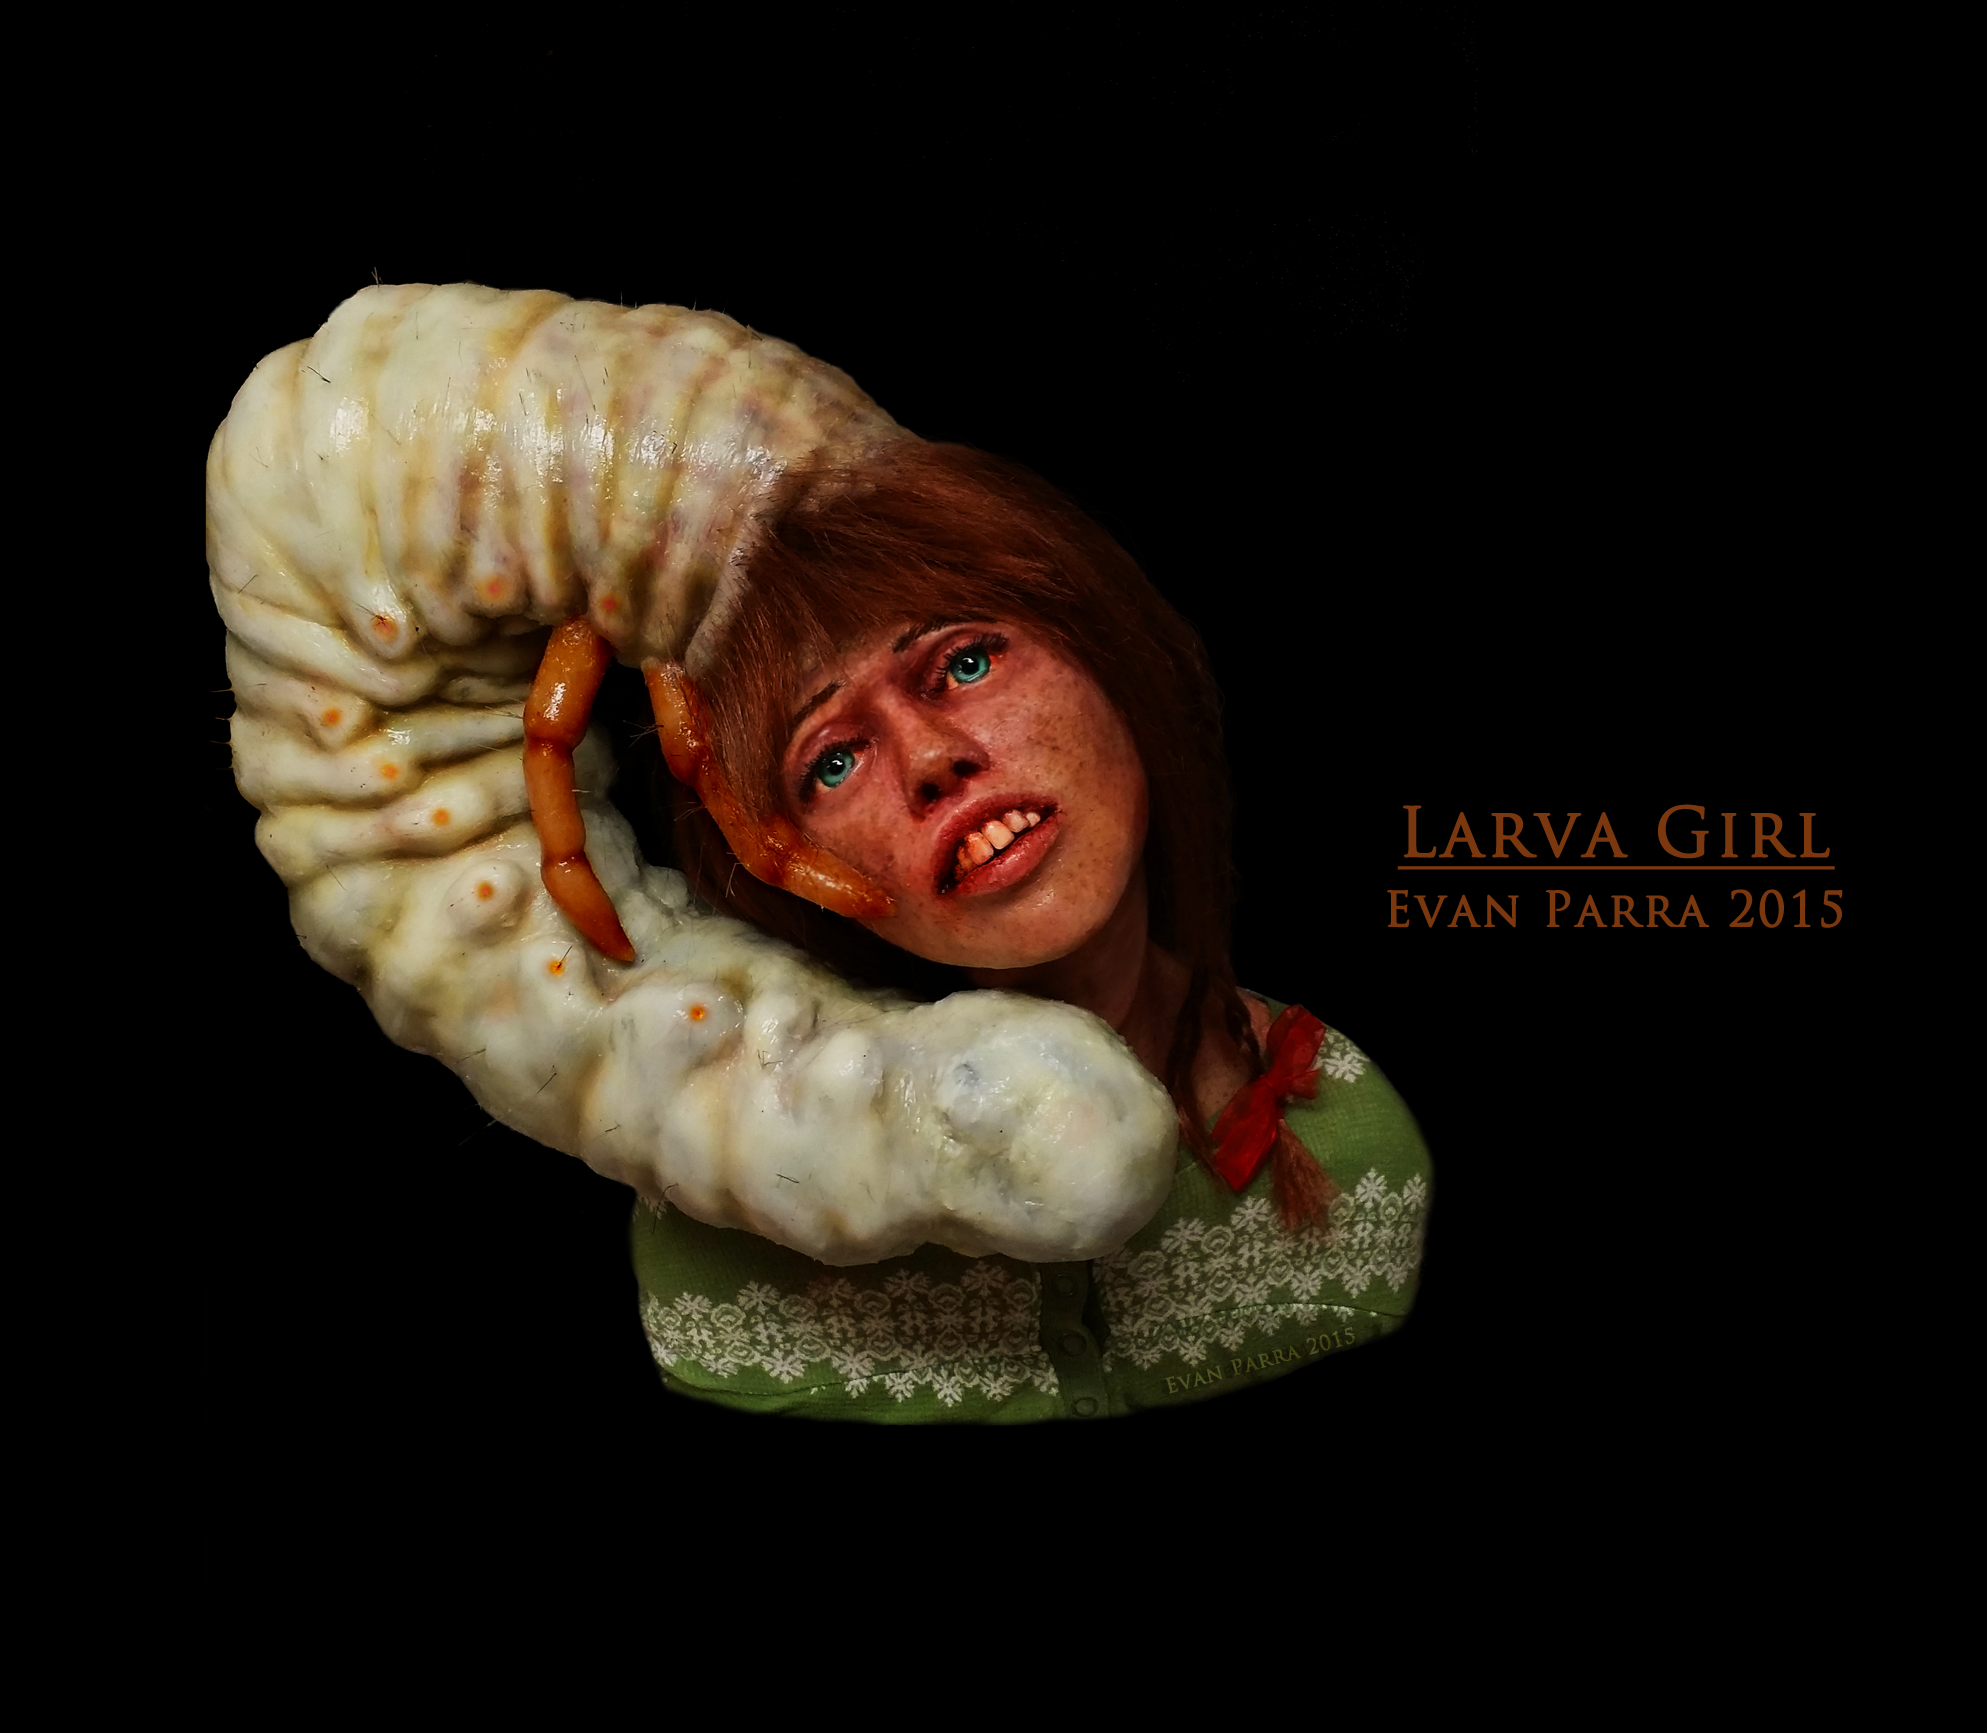 Larva Girl Etsy.png